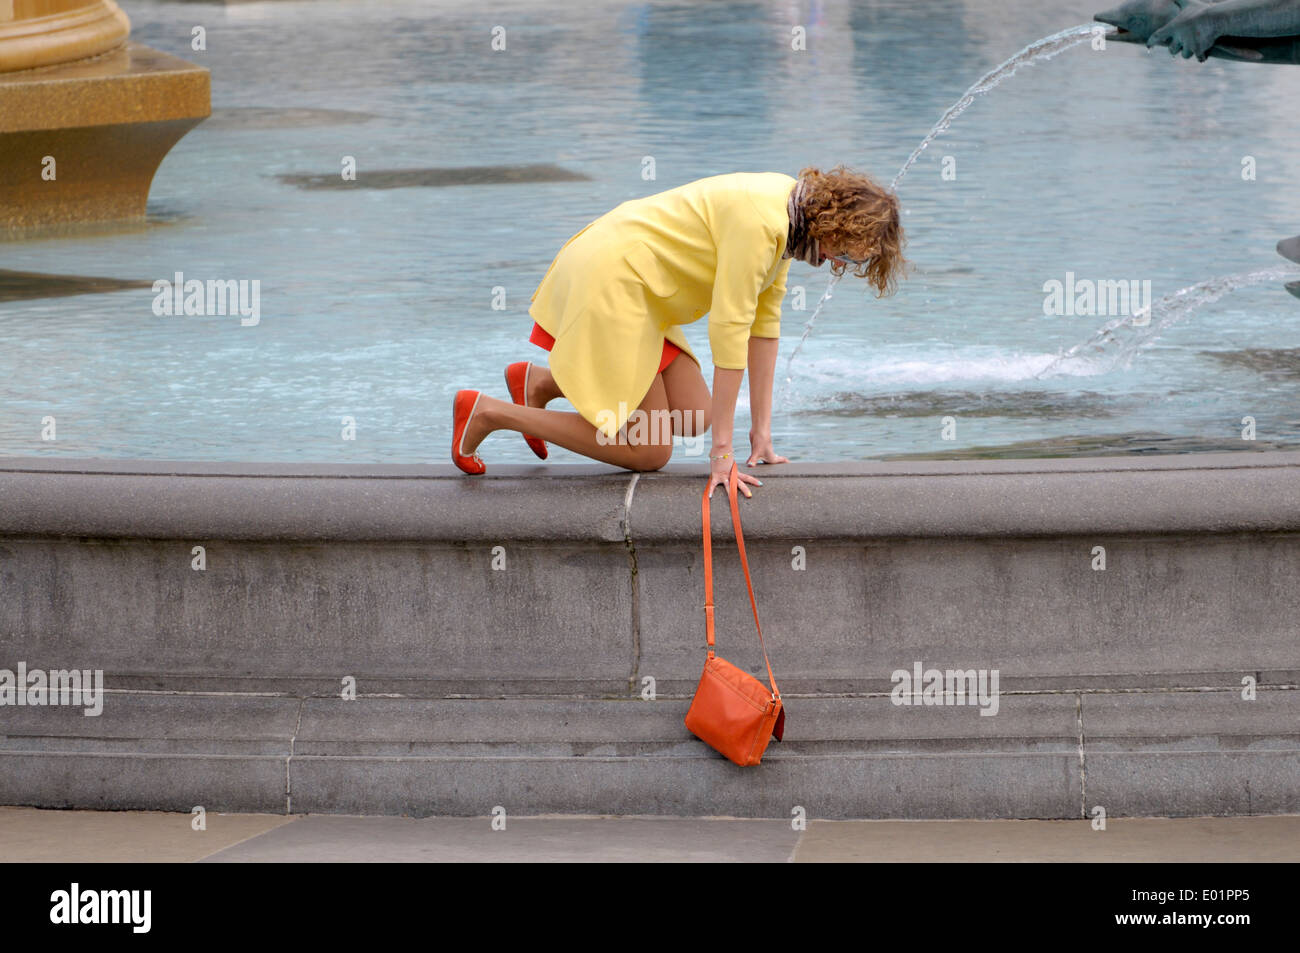 London, England, UK. Trafalgar Square - woman in a yellow coat climbing onto a fountain (for a photo) Stock Photo